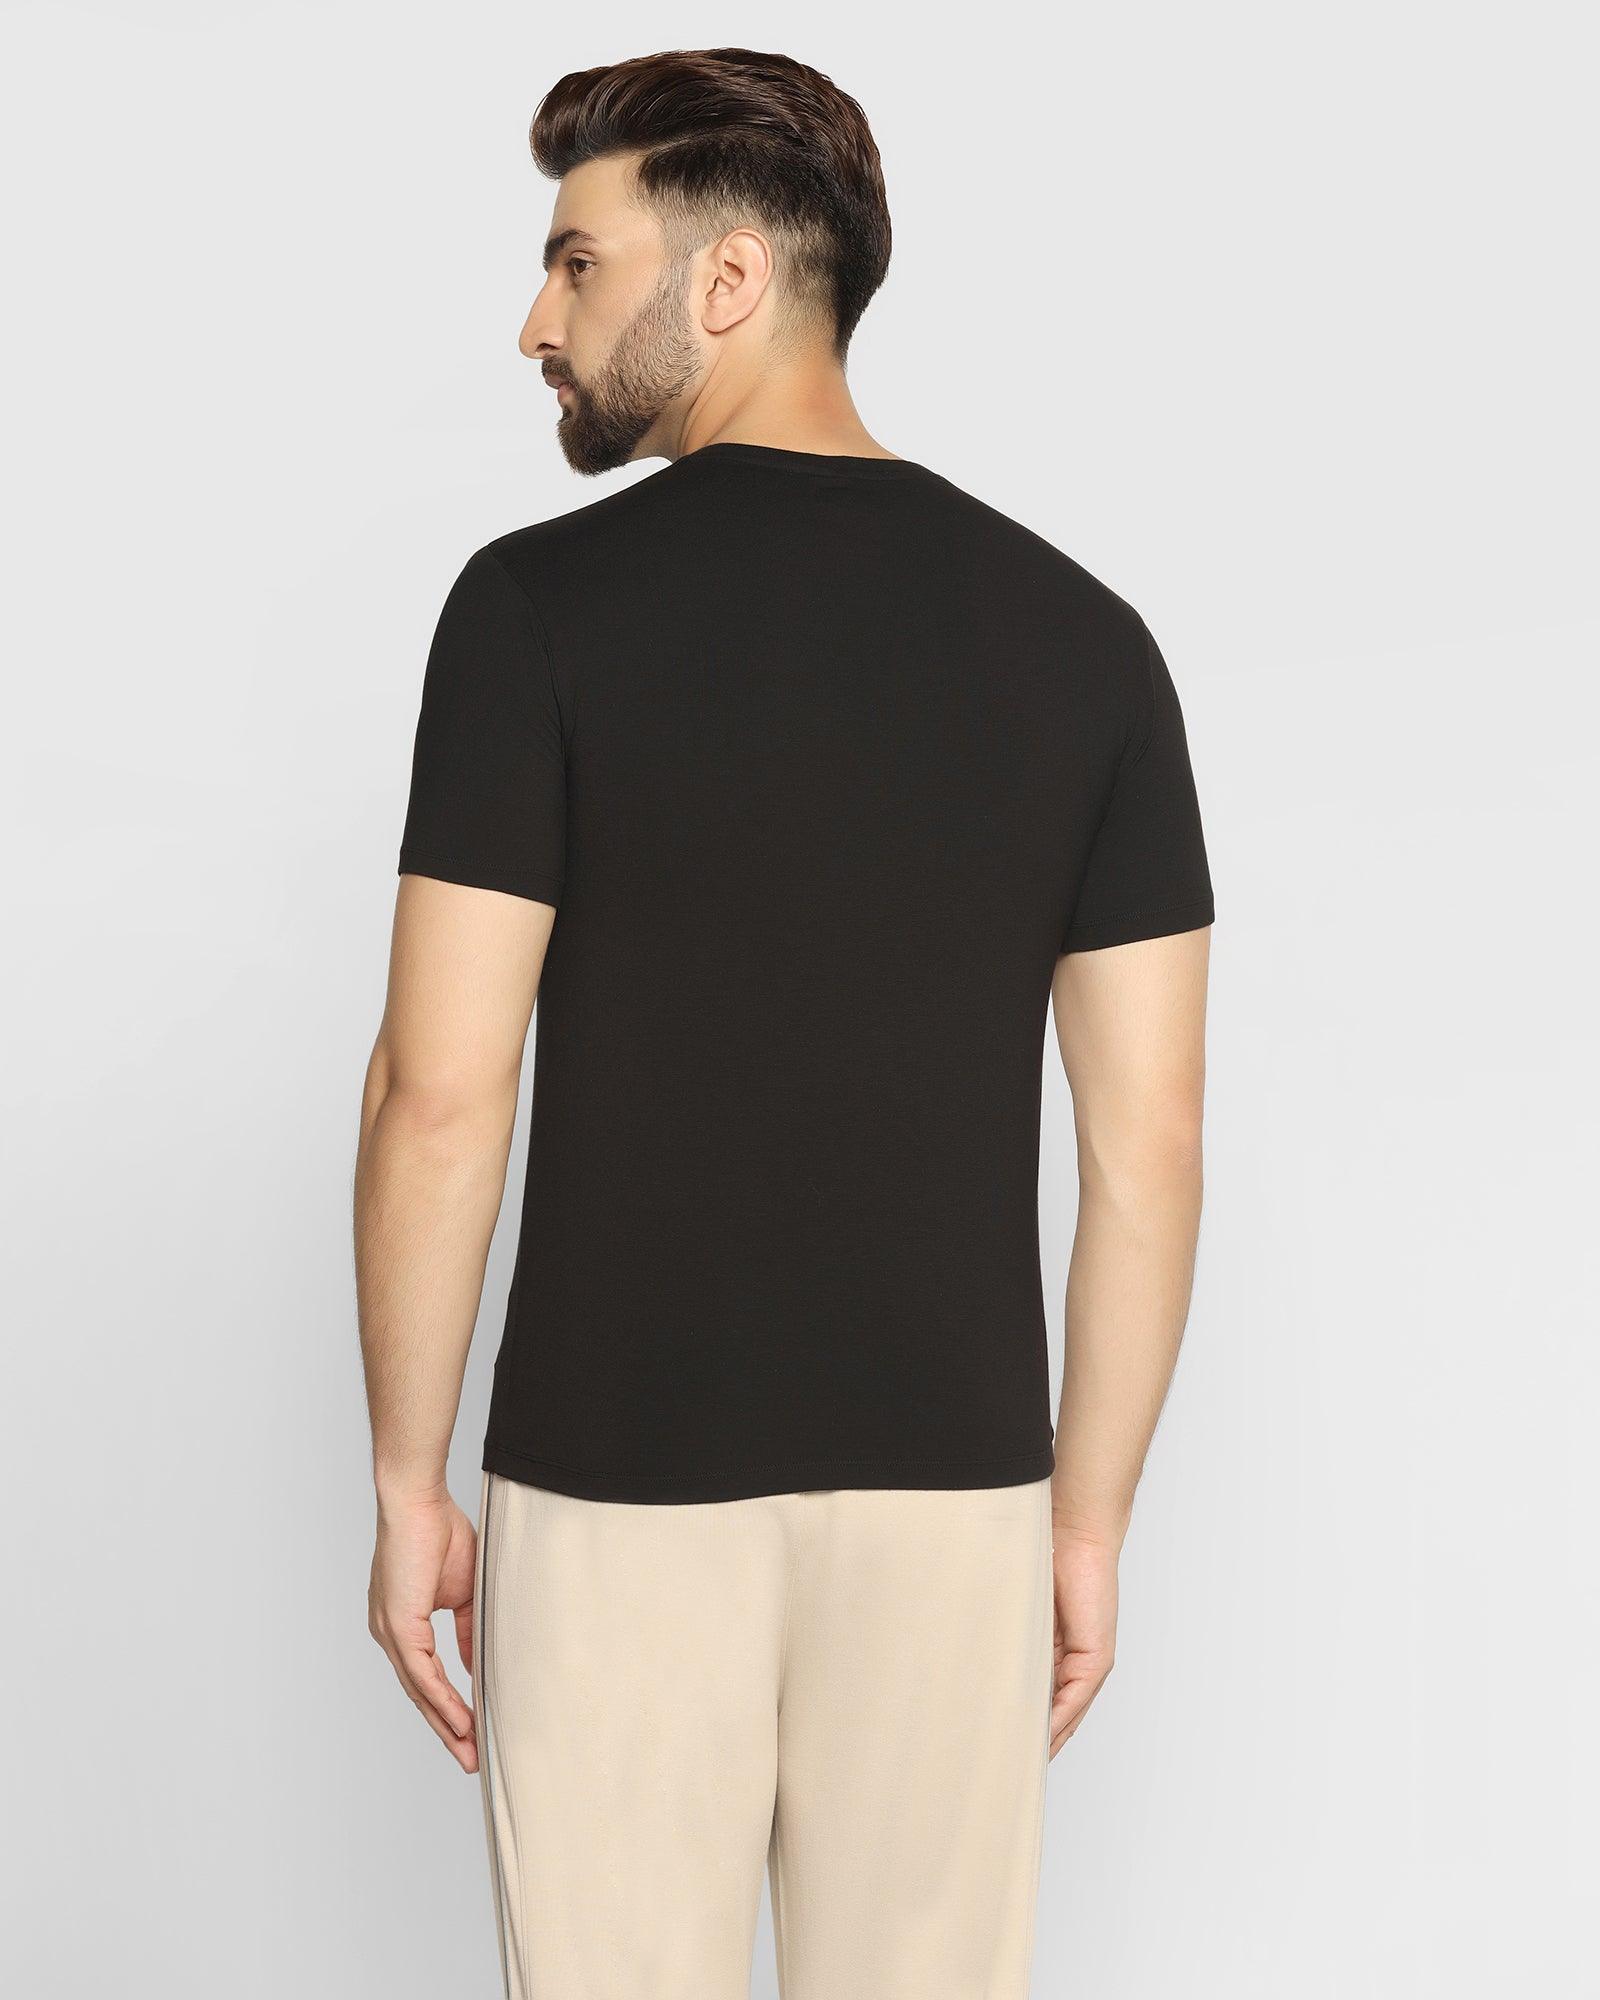 Crew Neck Black Solid T Shirt - Hola